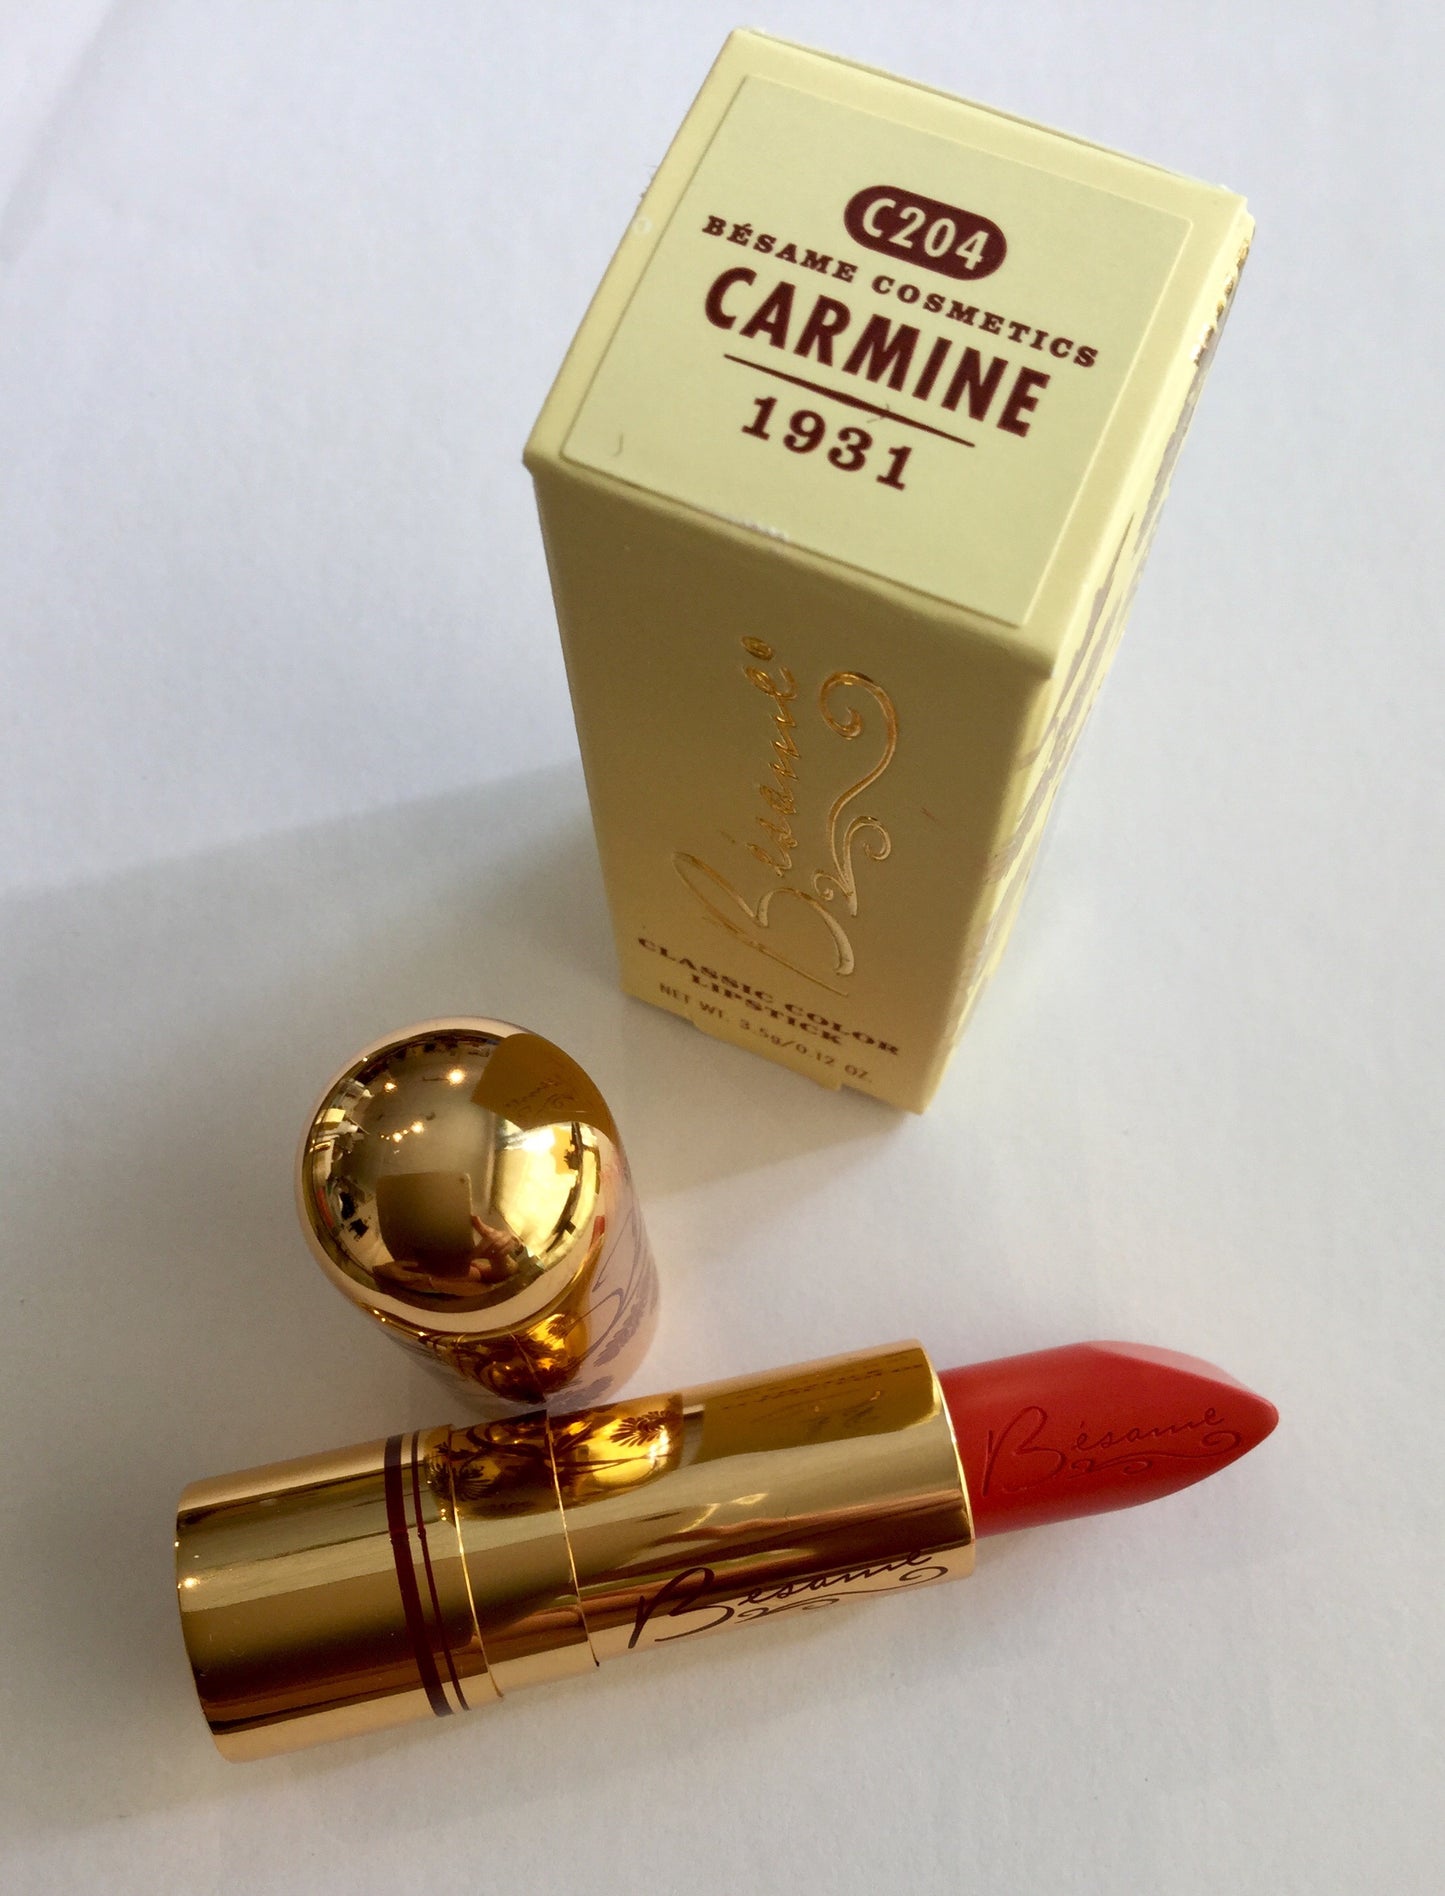 1931 Carmine Lipstick